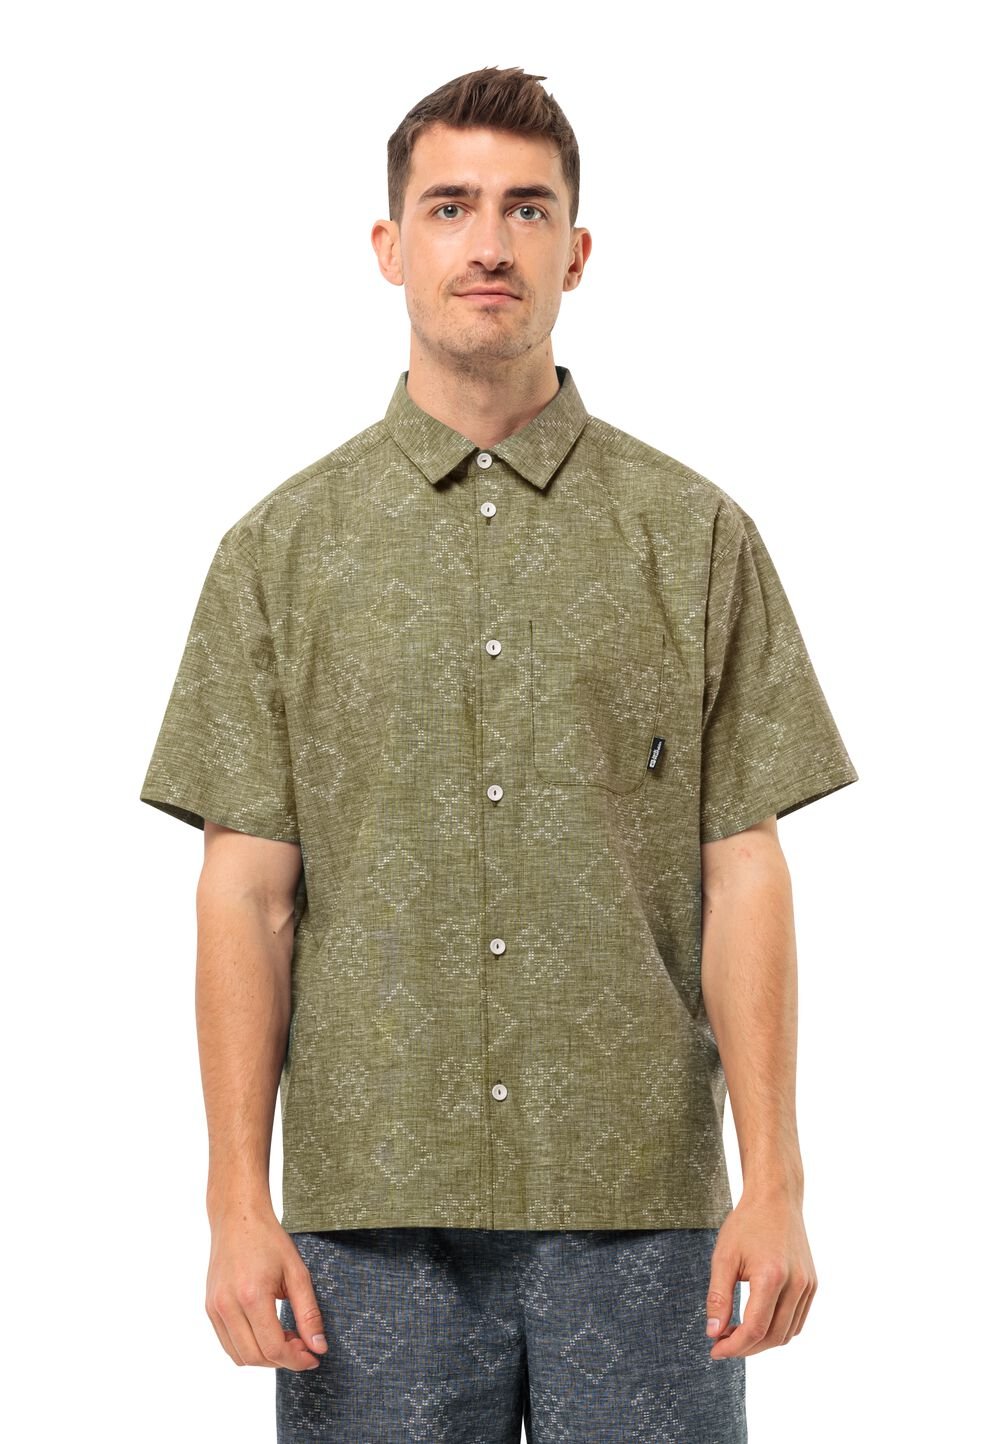 Jack Wolfskin Karana Shirt Men Overhemd met korte mouwen Heren 3XL bruin bay leaf